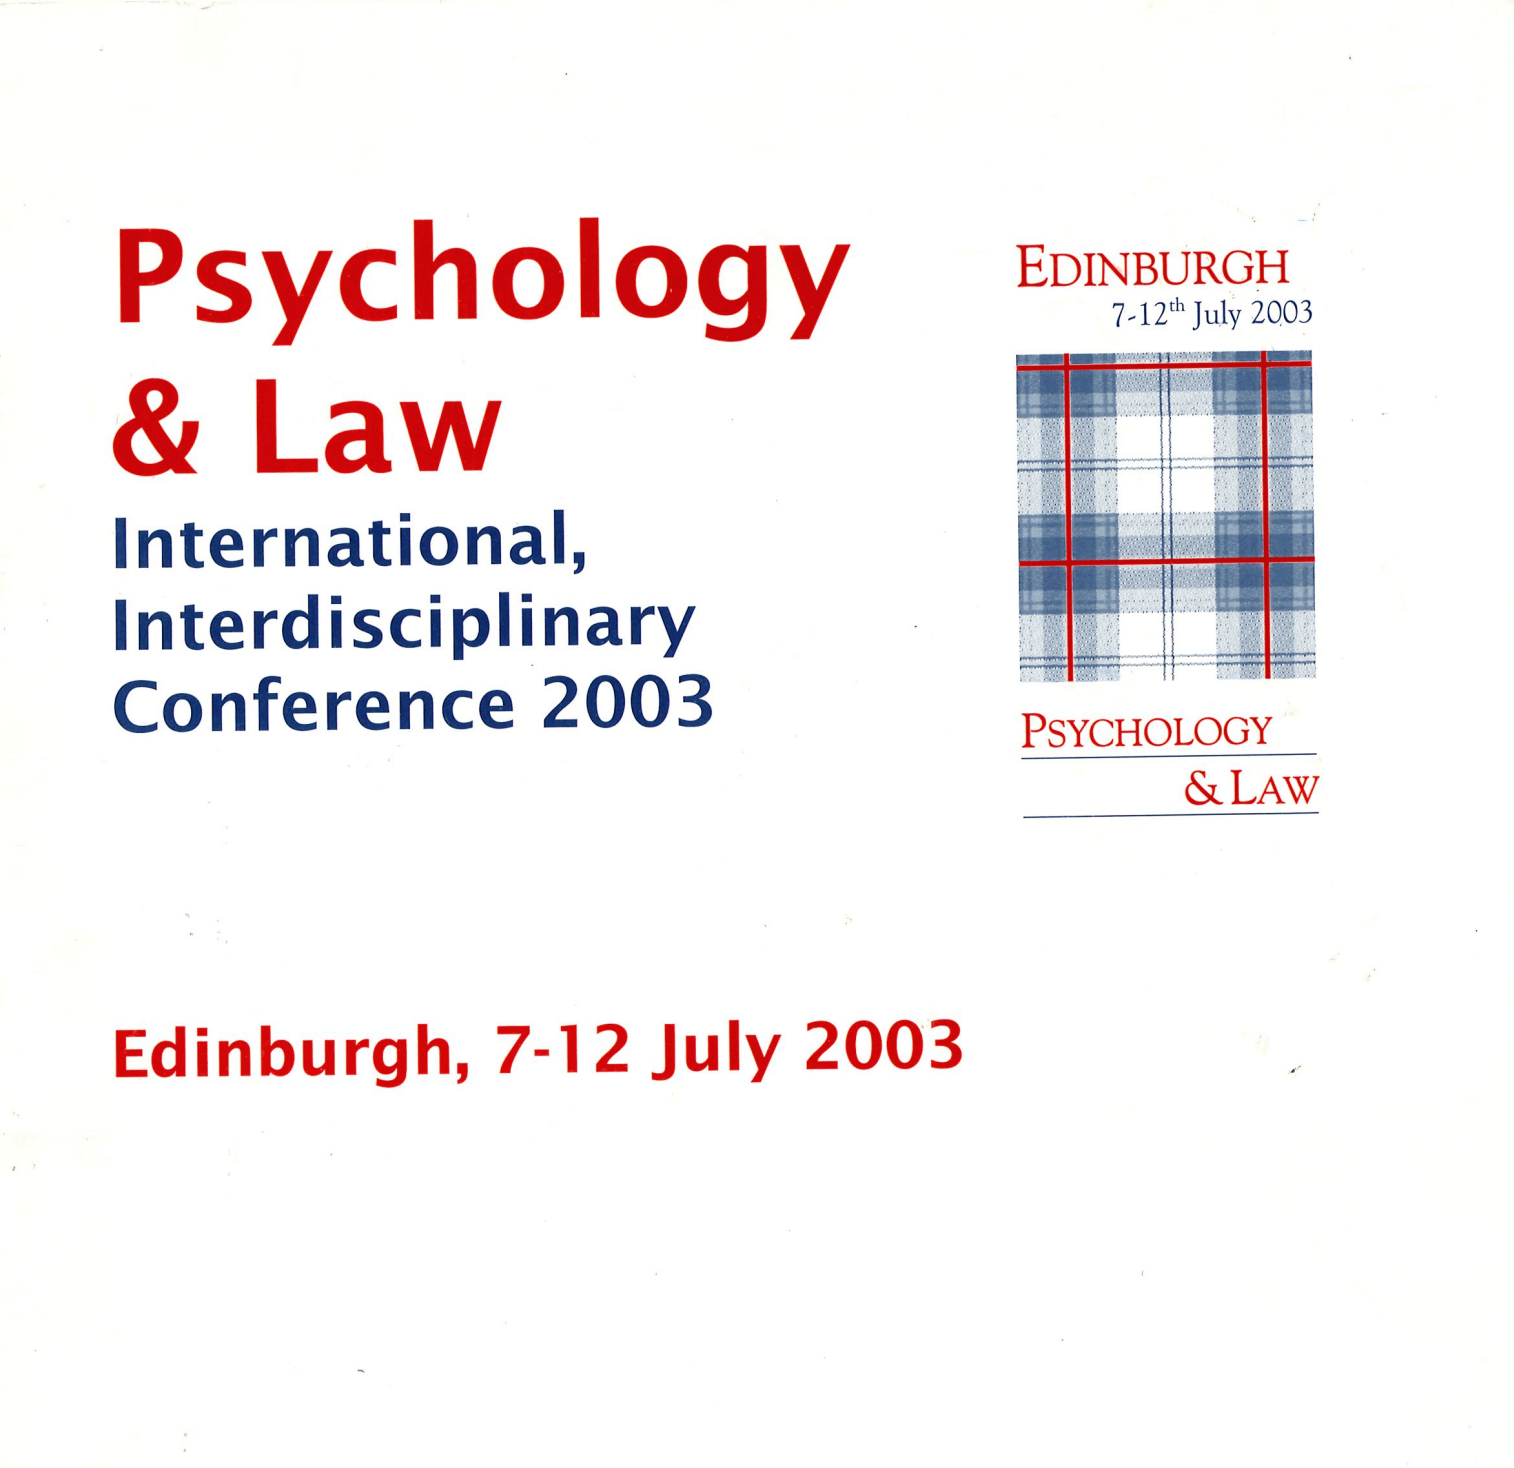 2003 International Conference